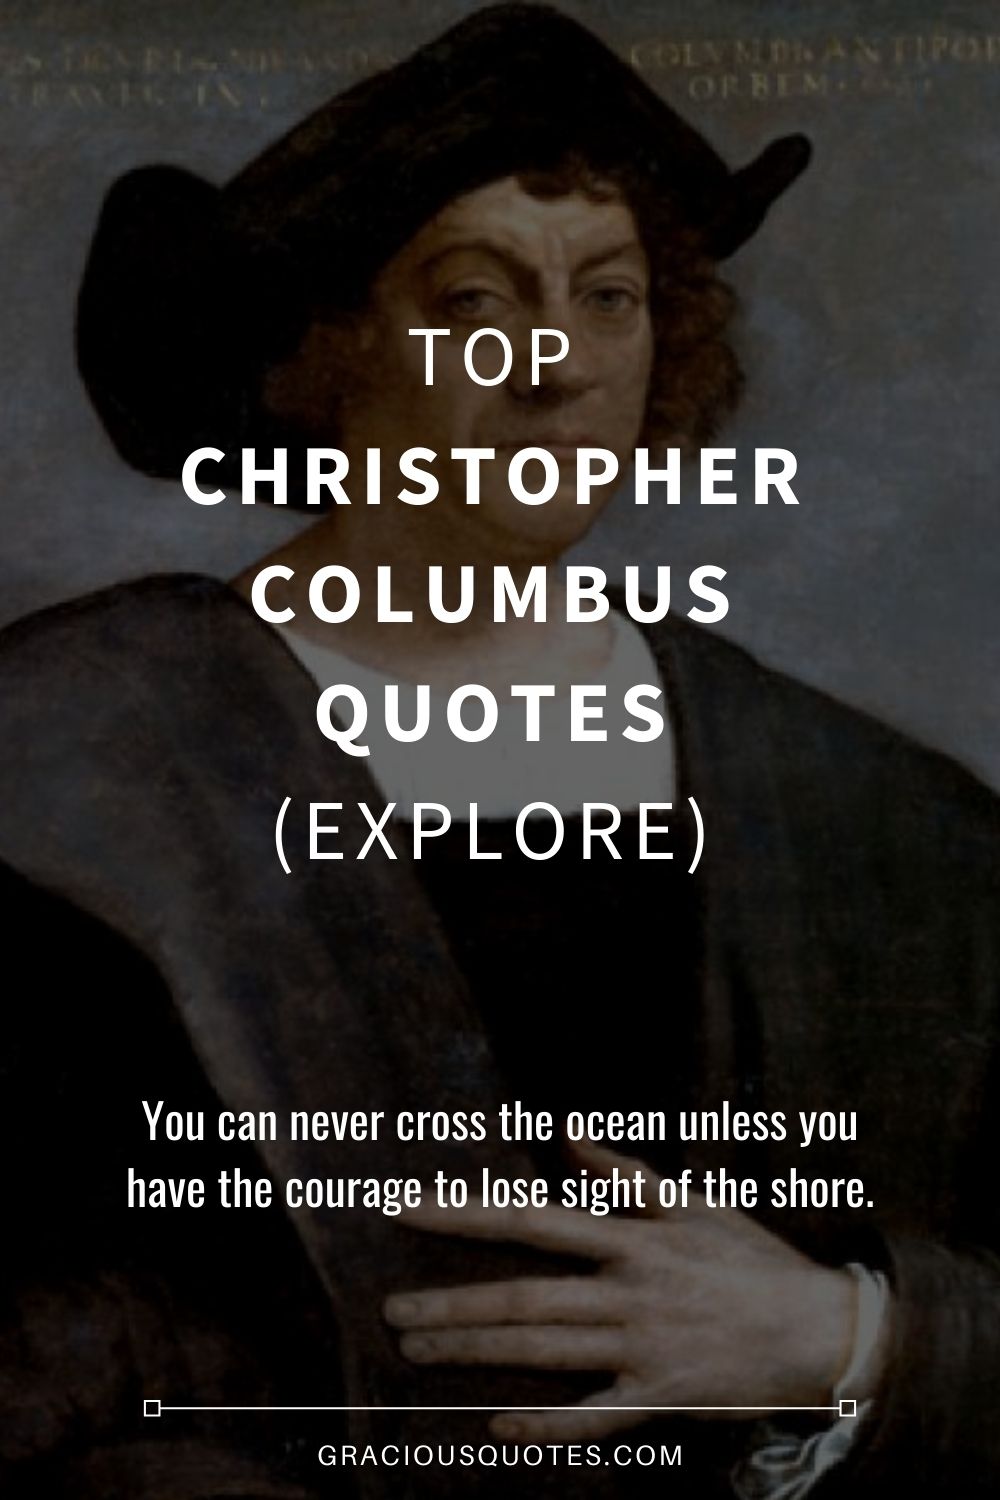 Top Christopher Columbus Quotes (EXPLORE) - Gracious Quotes